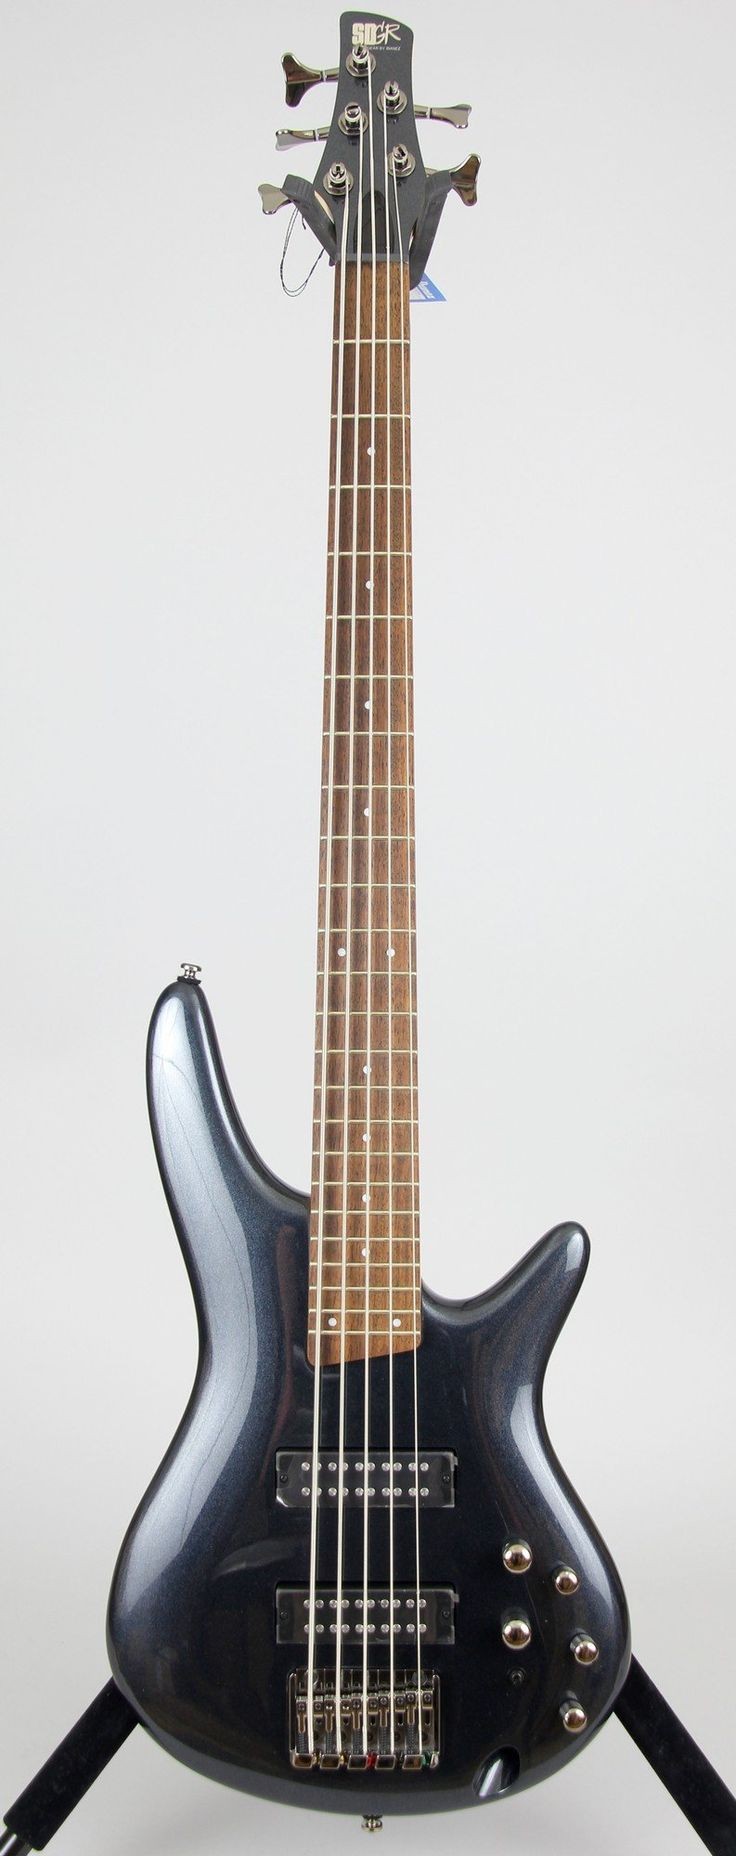 Ibanez SR305e 5 String Bass Guitar